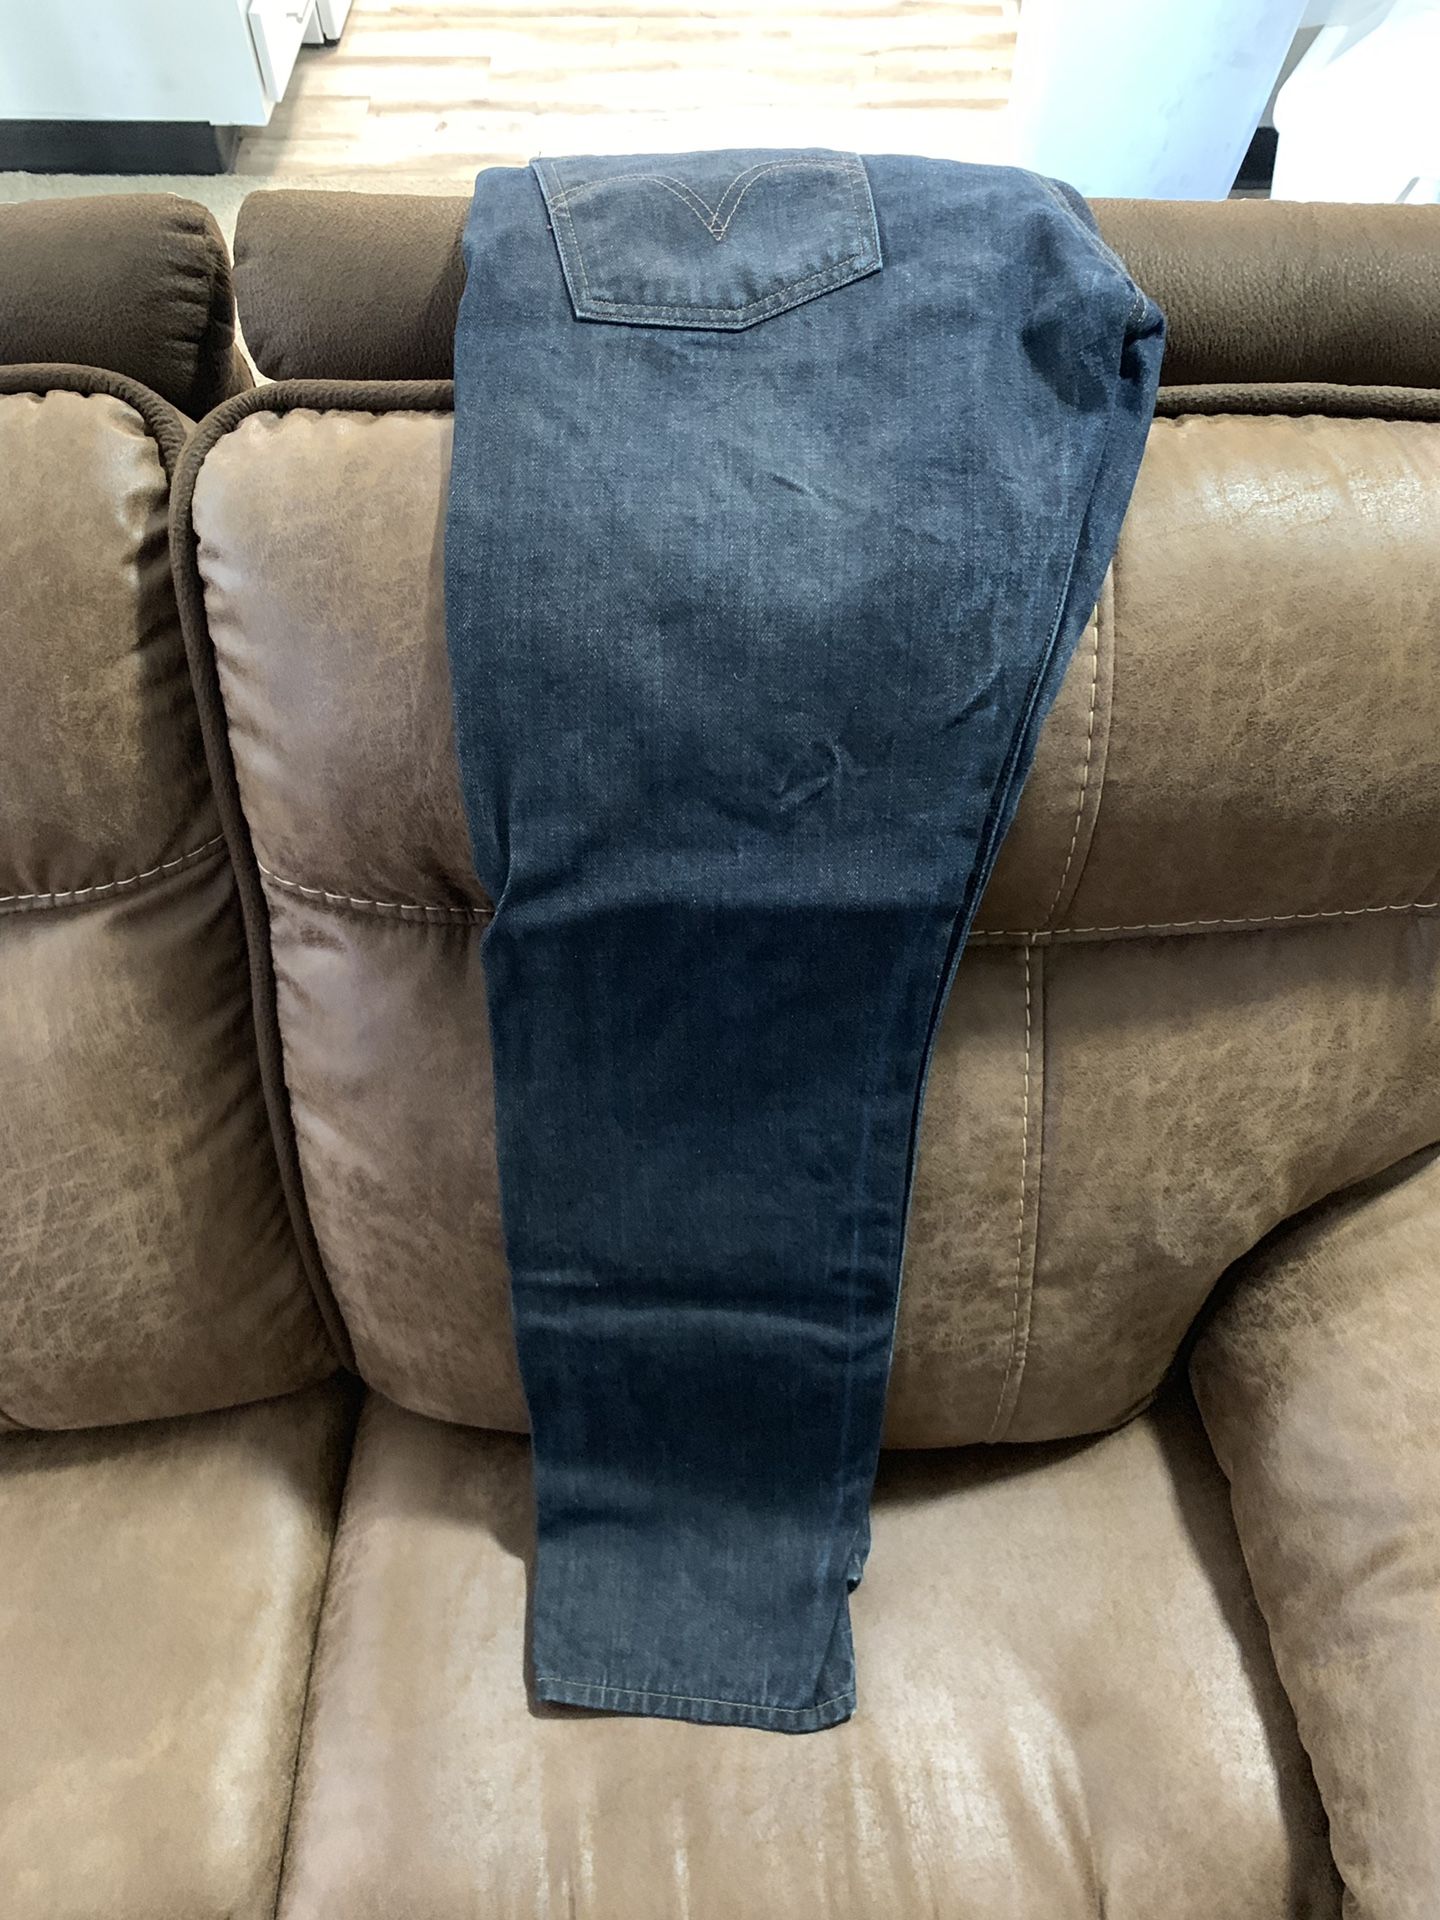 Levi’s 511 skinny jeans...dark blue color.